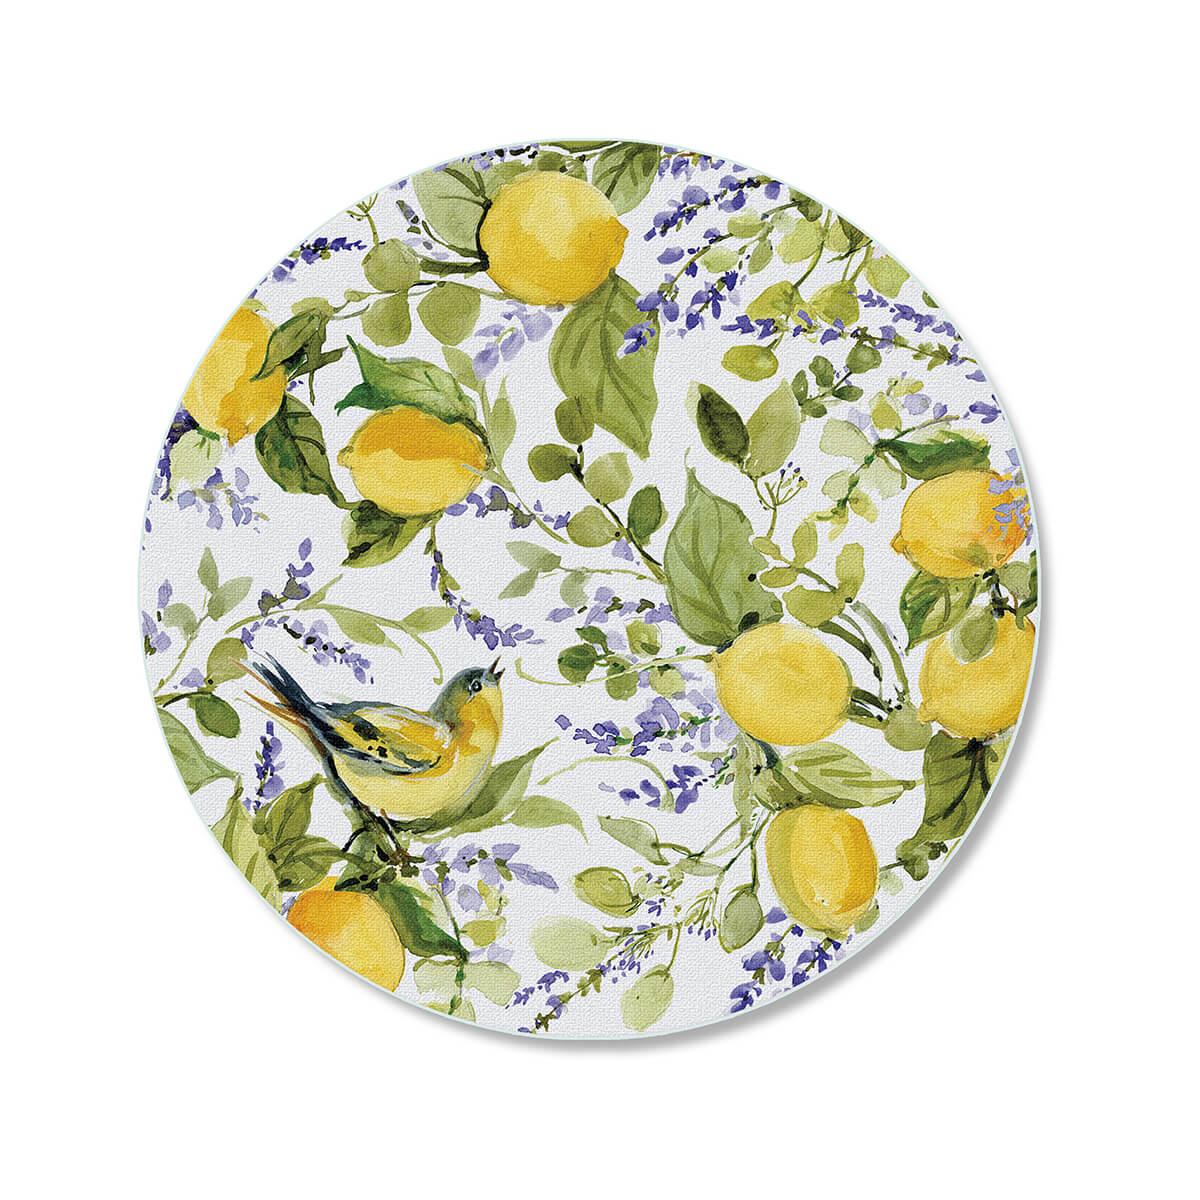  Round Counter Saver - Watercolor Lemons